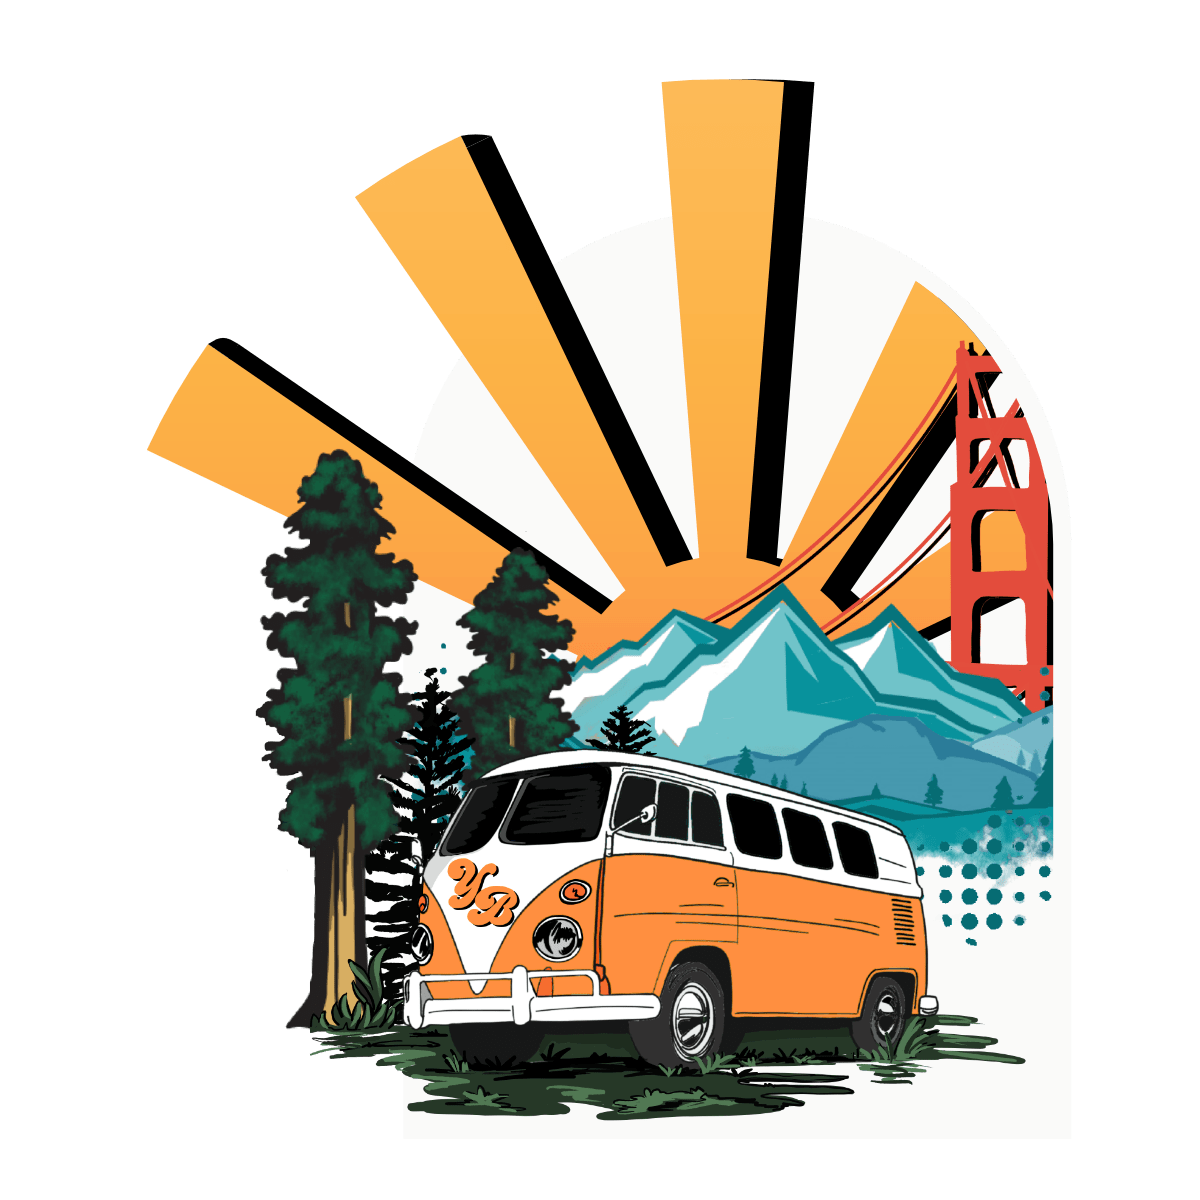 Yerba Buena yellow bus in the mountains